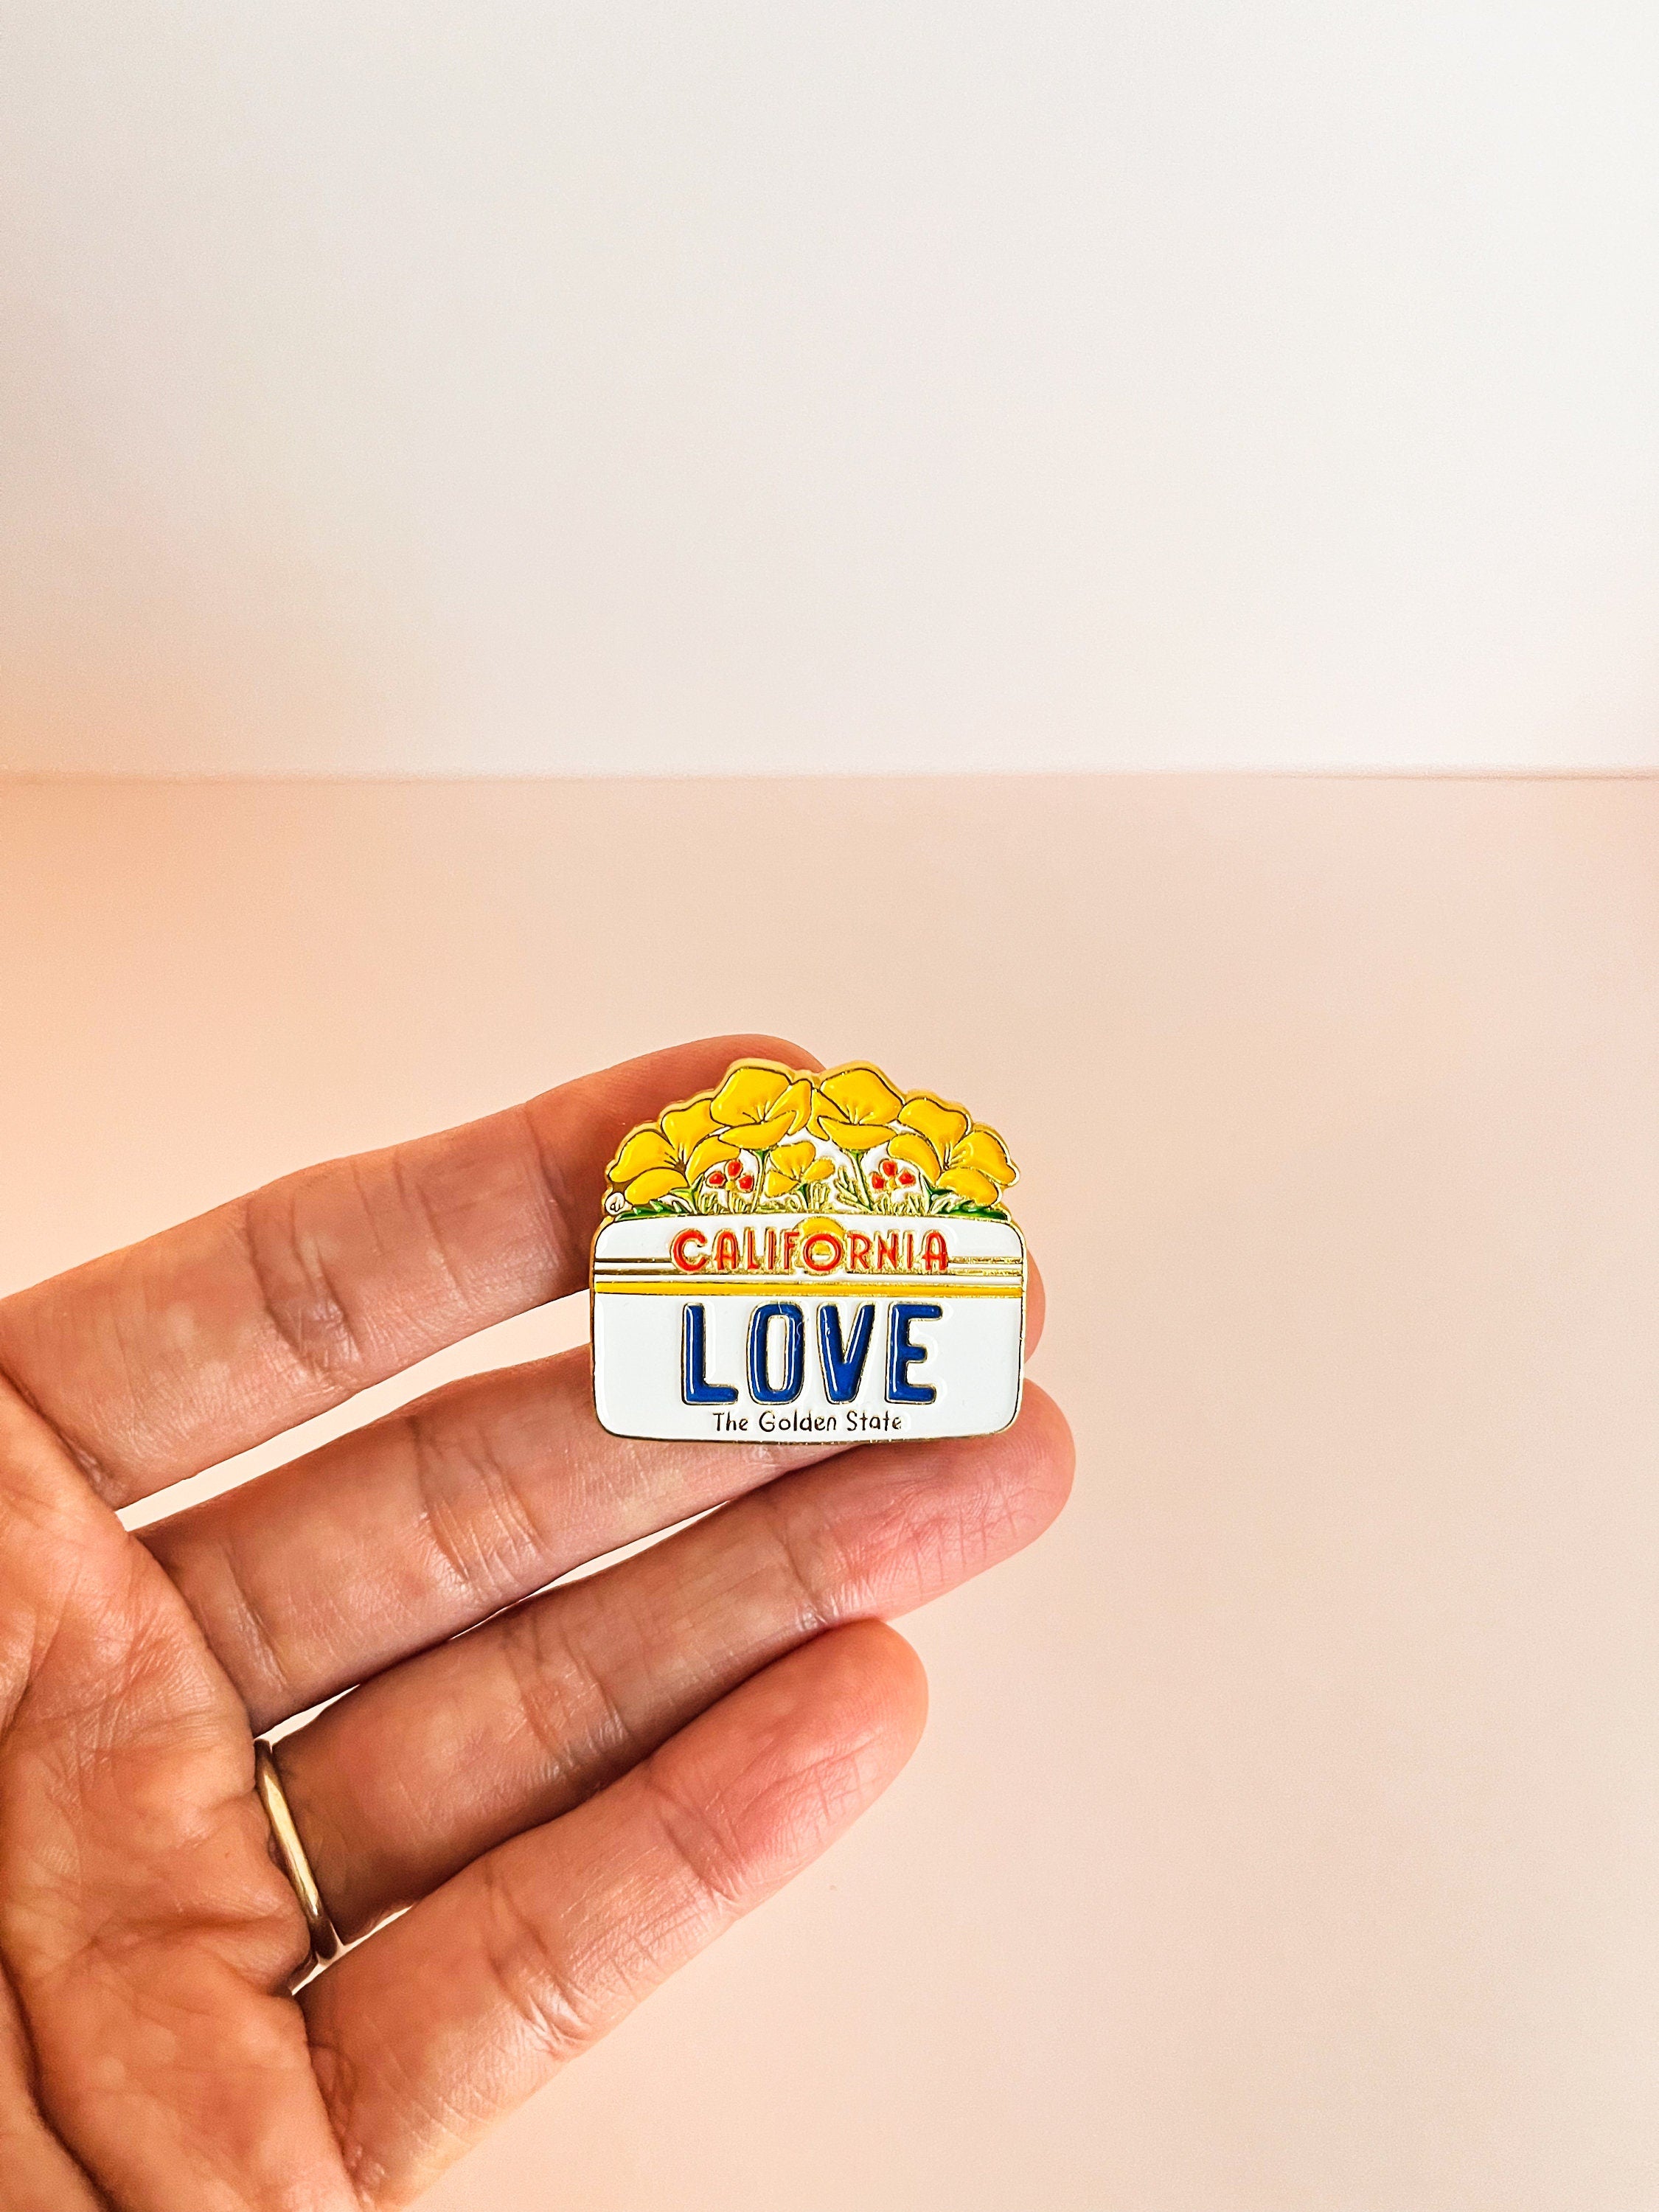 California Love License Plate Soft Enamel Pin